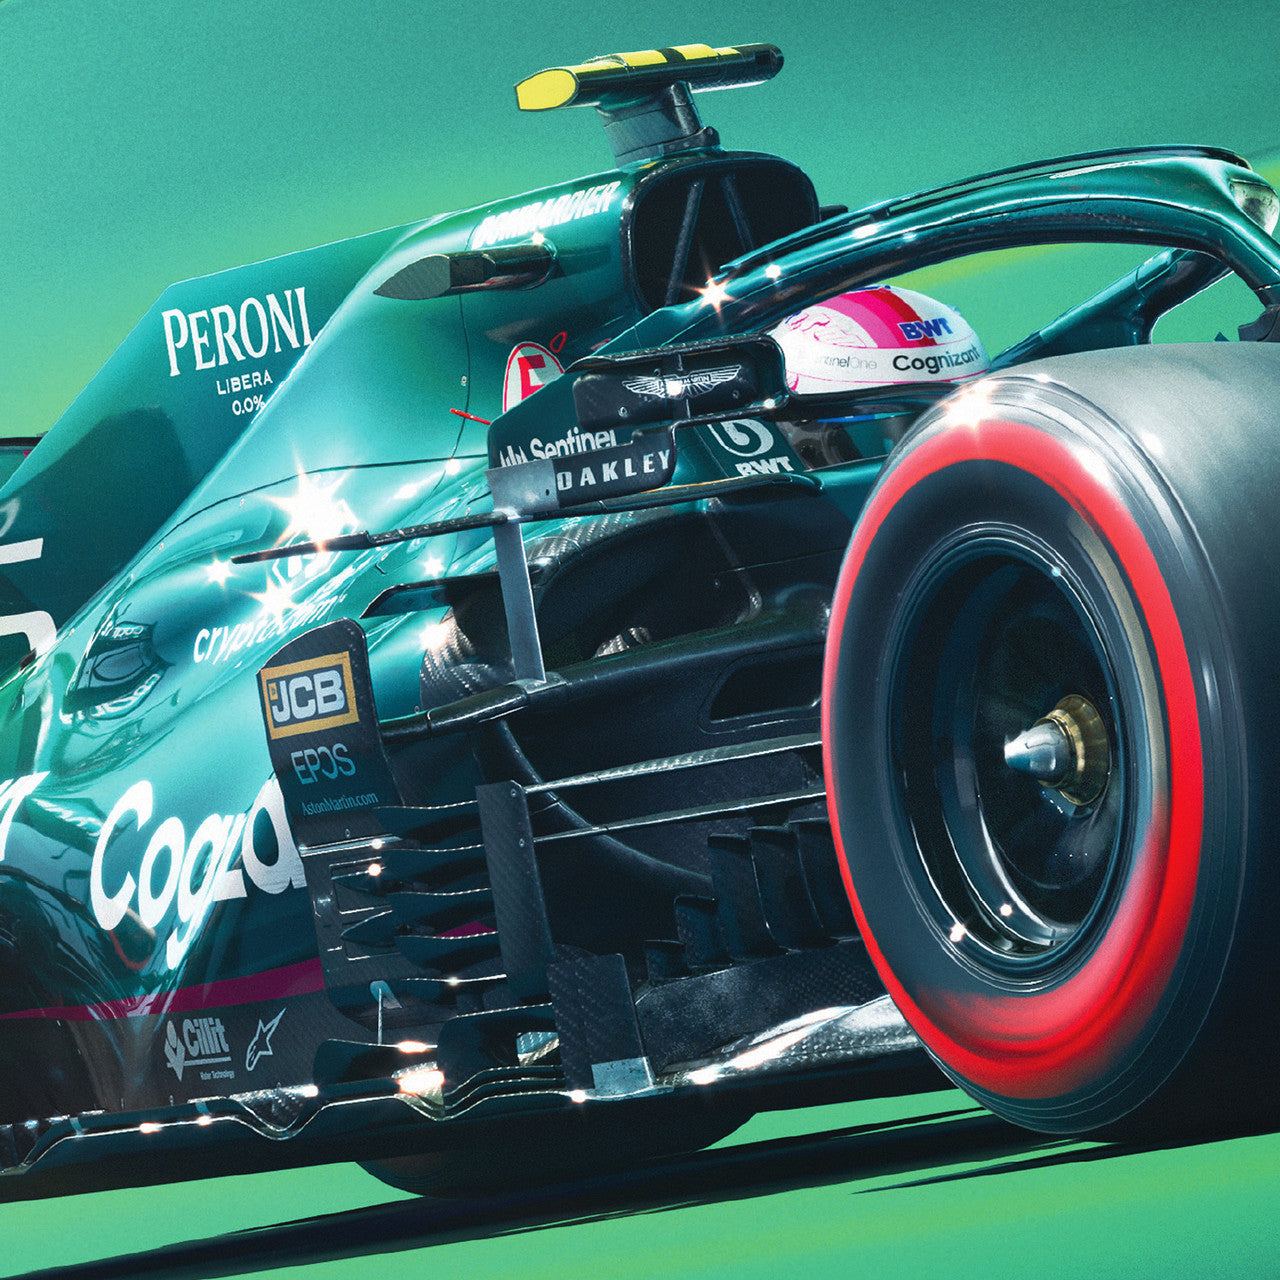 Sebastian Vettel - Aston Martin Cognizant Formula One™ Team - 2021 | Signed Collector’s Edition